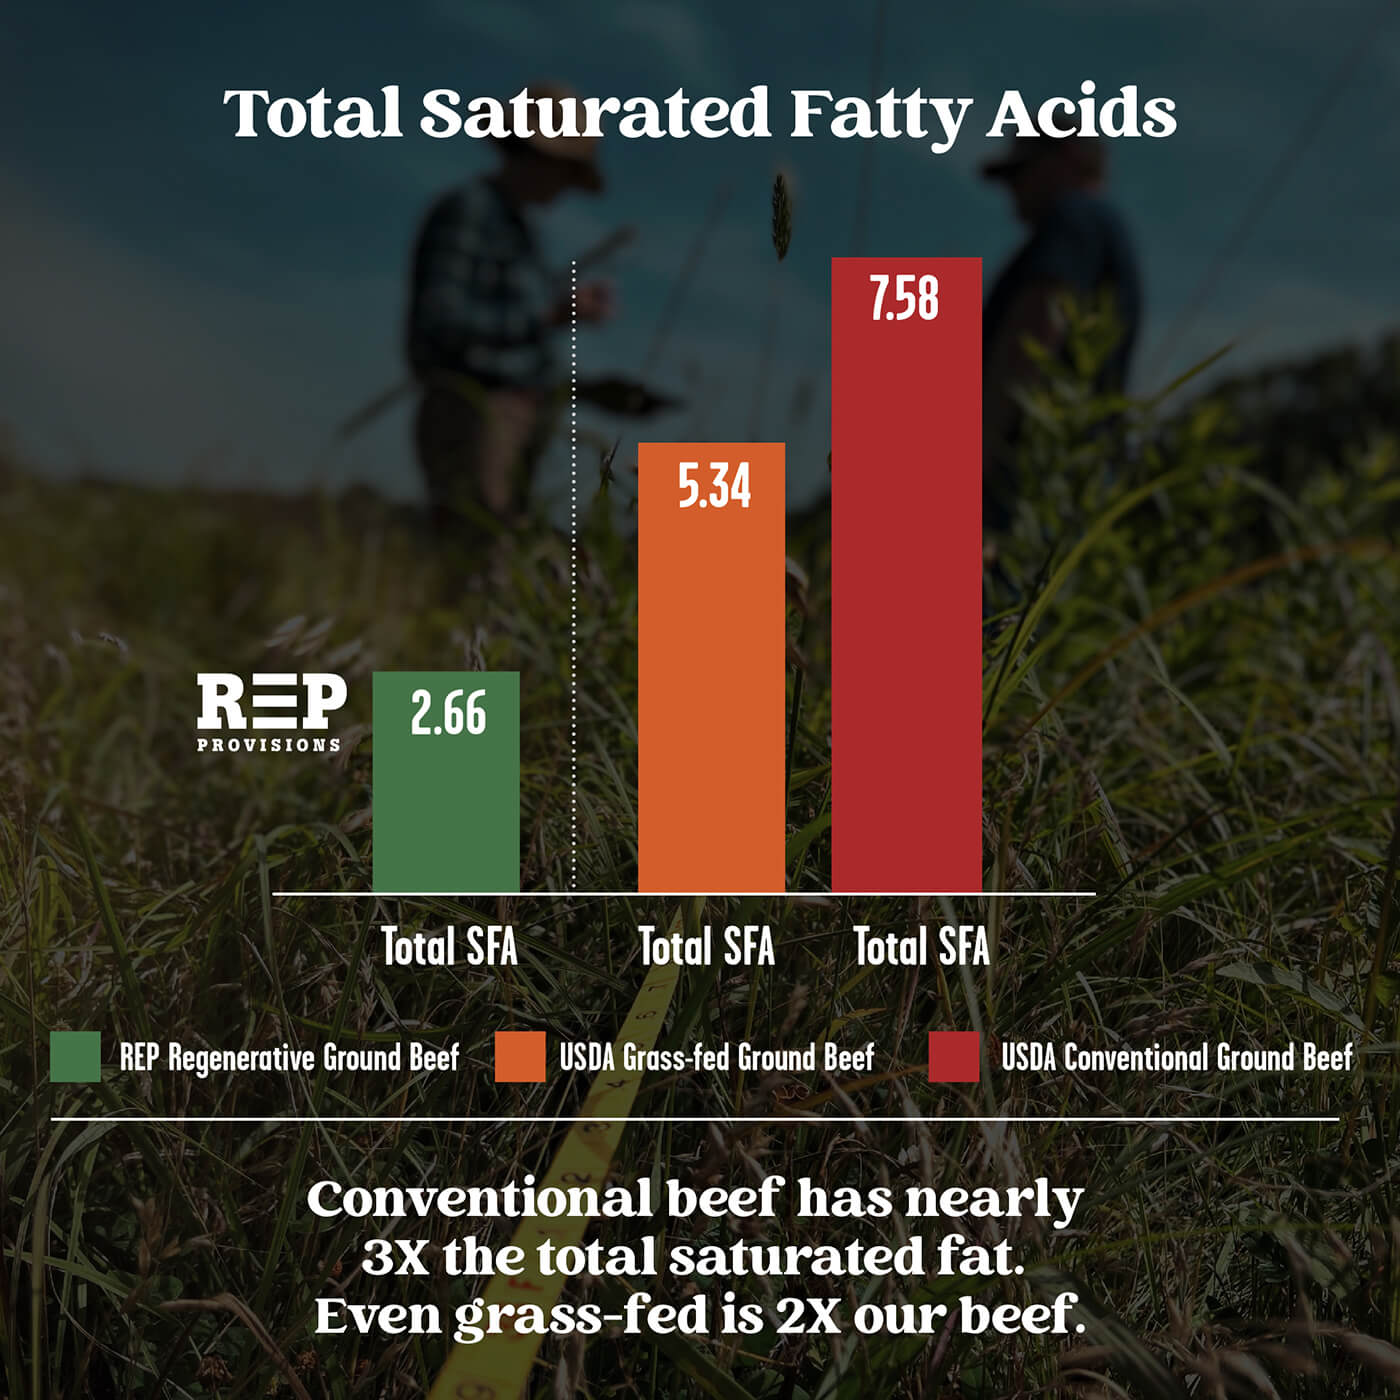 SFA: Saturated Fatty Acids